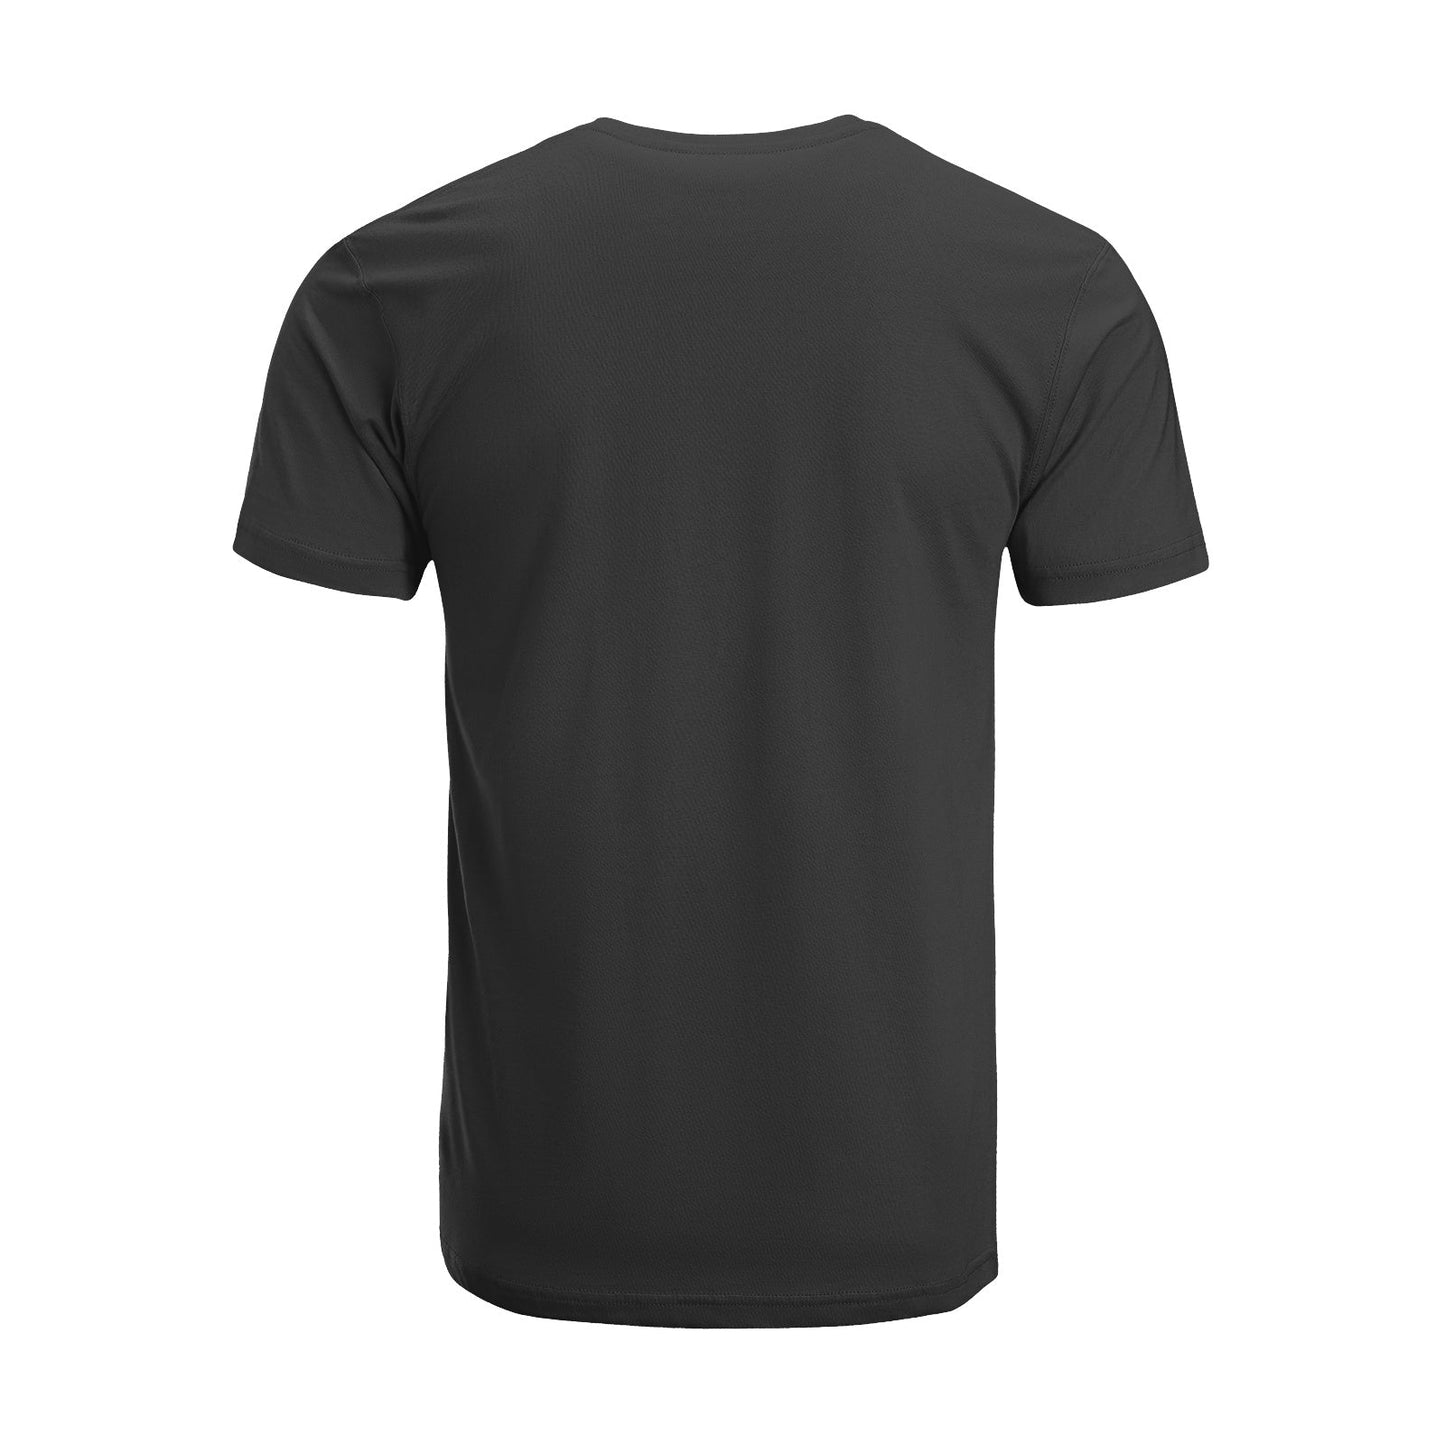 Unisex Short Sleeve Crew Neck Cotton Jersey T-Shirt MOM 20